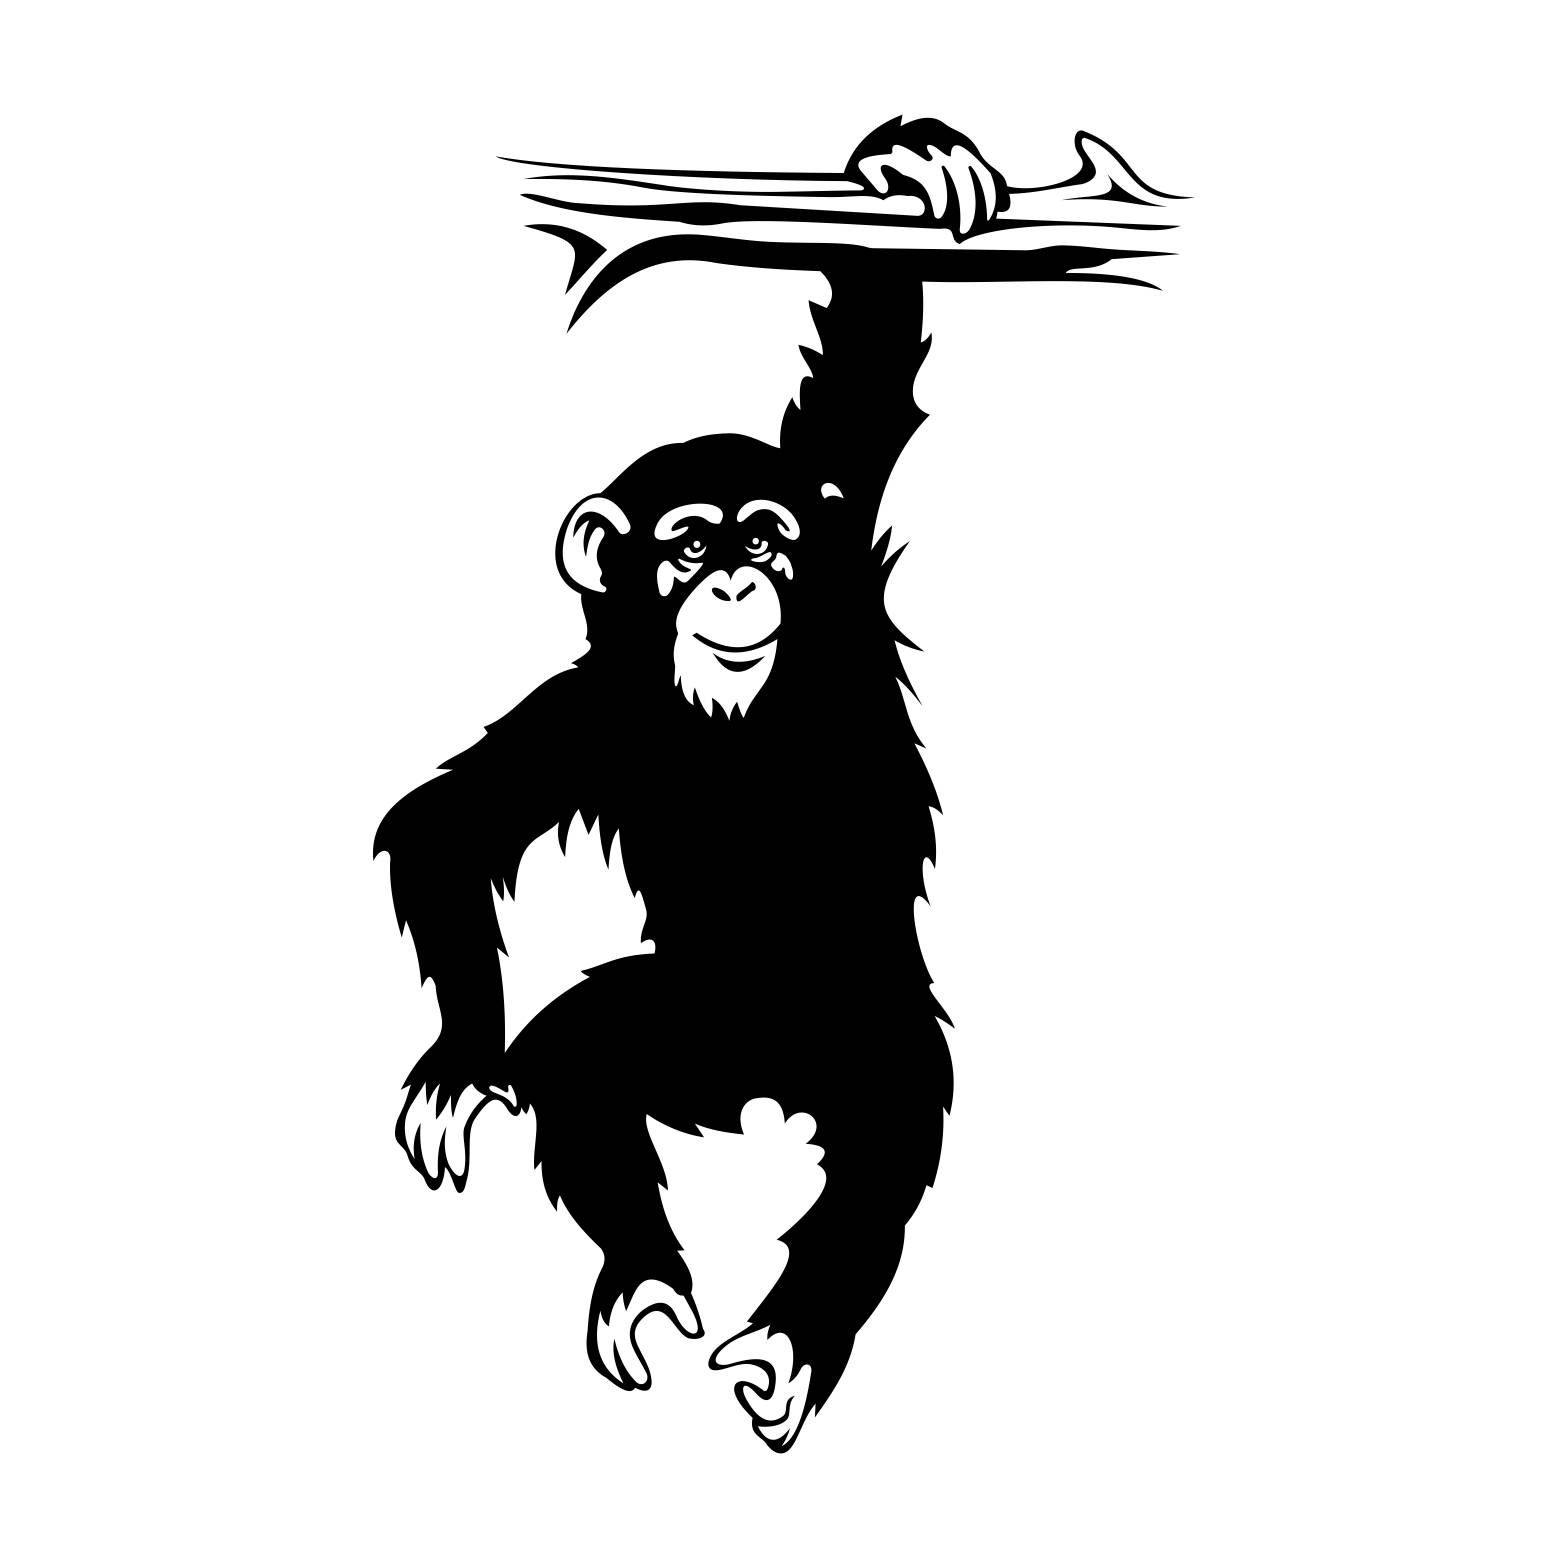 clipart monkey chimpanzee